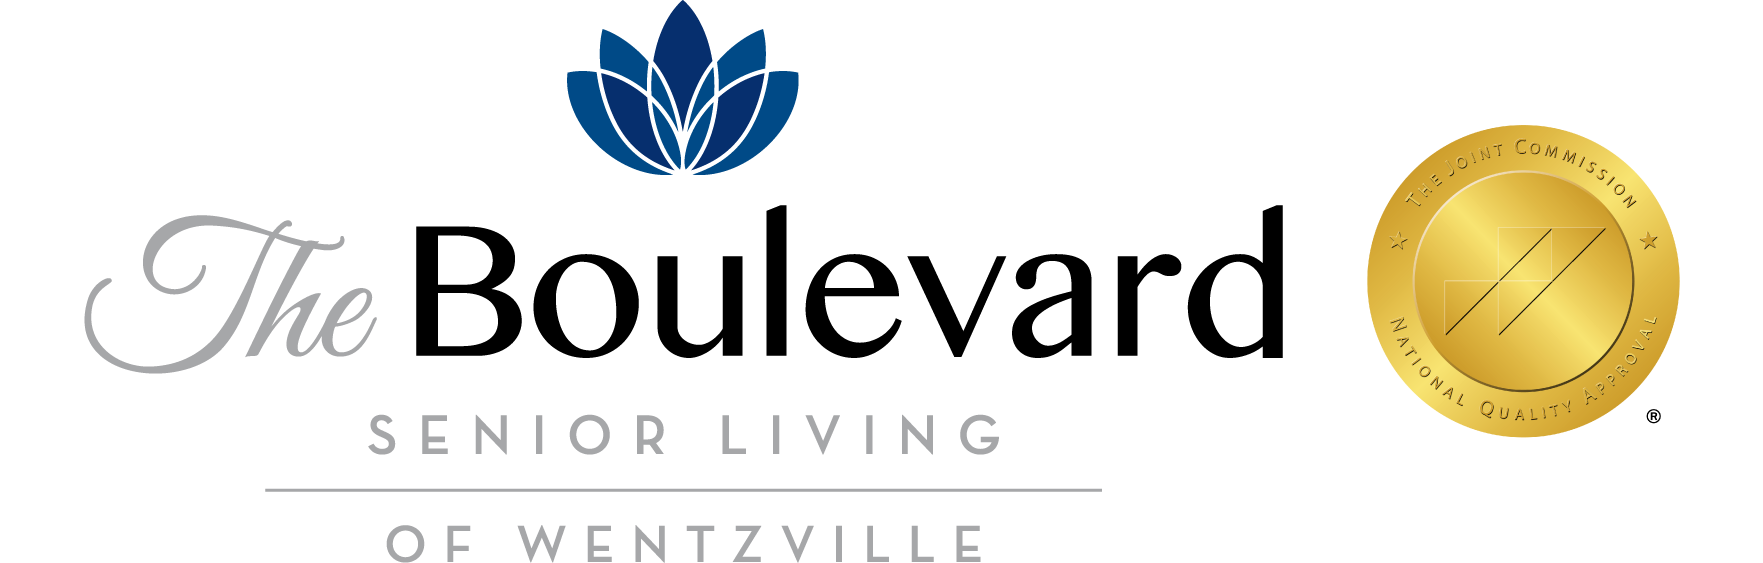 The Boulevard of Wentzville Senior Living - Joint Commission Award Badge